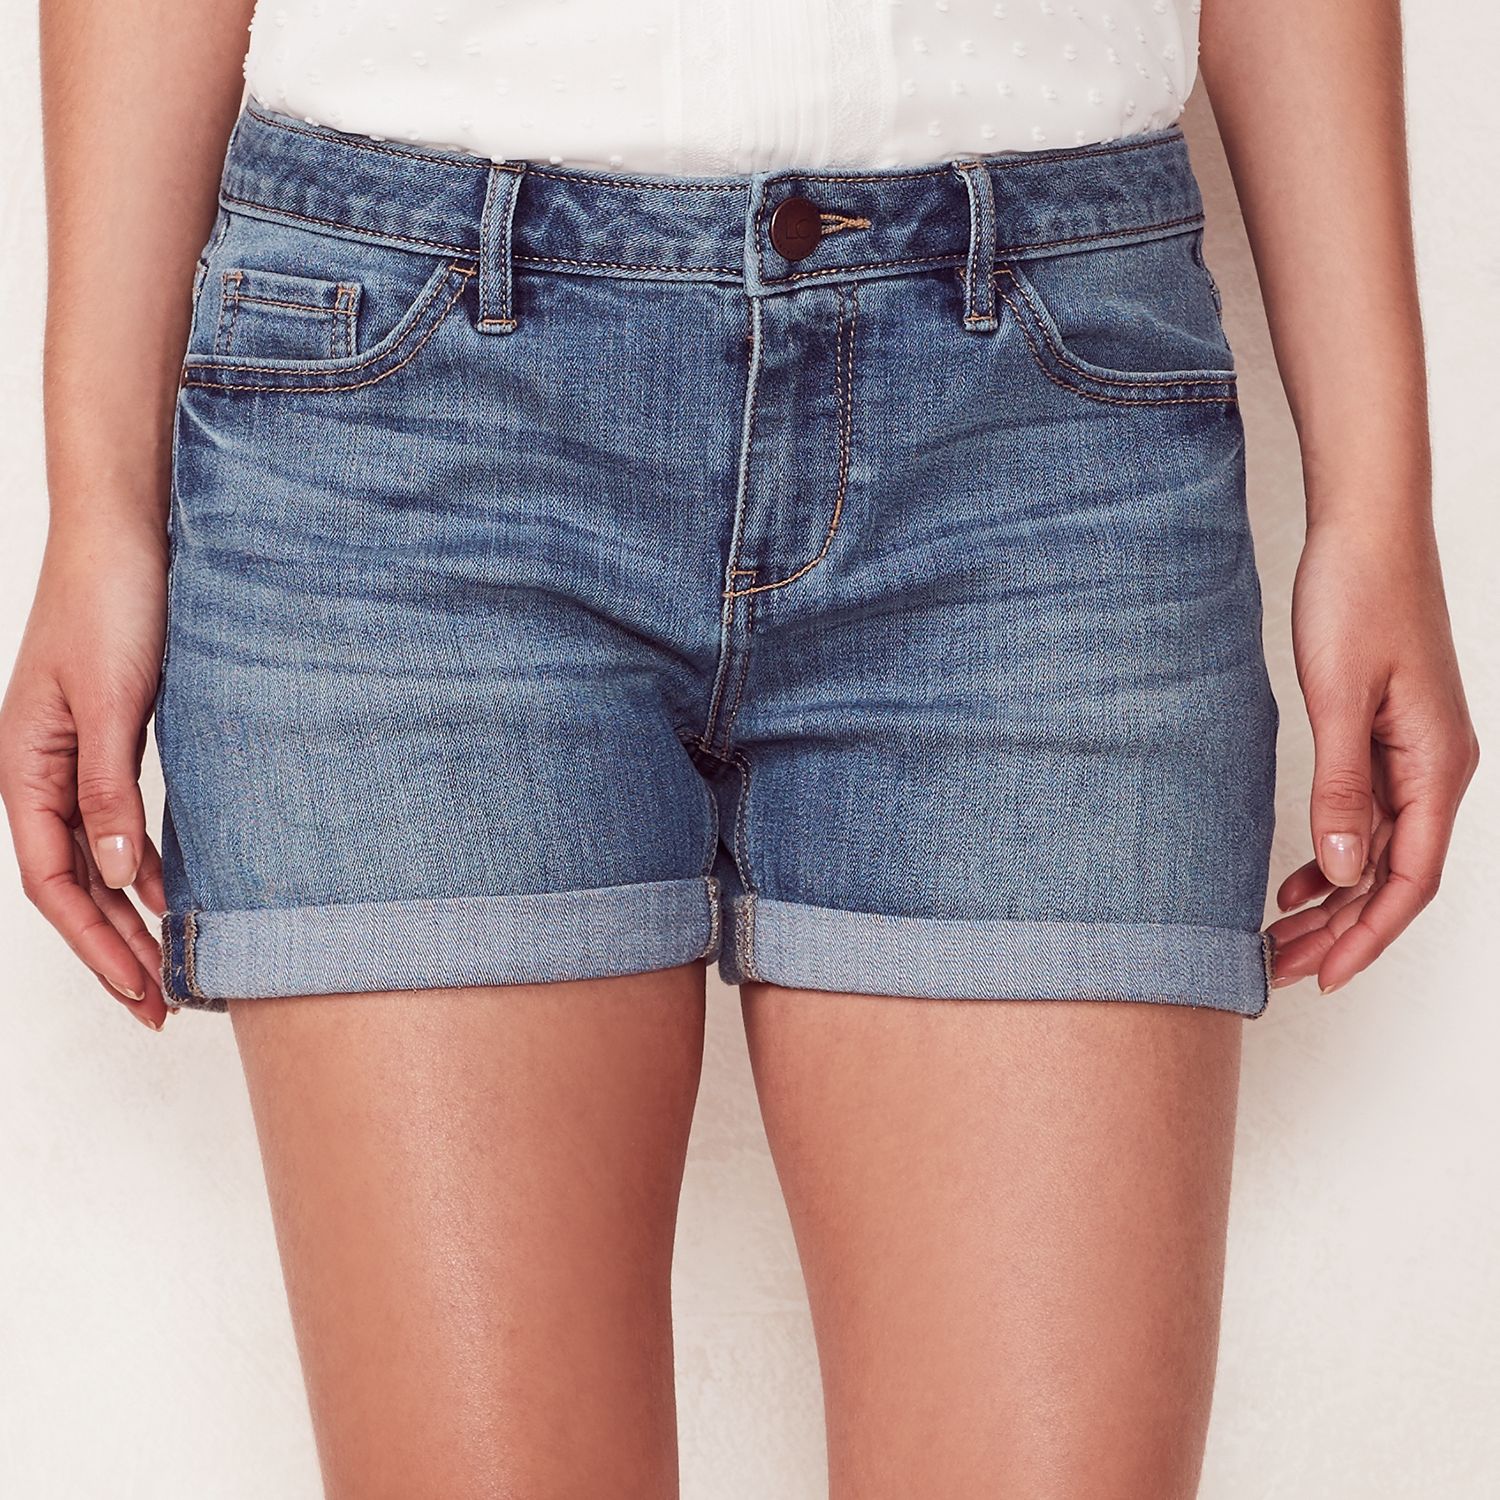 lauren conrad jean shorts